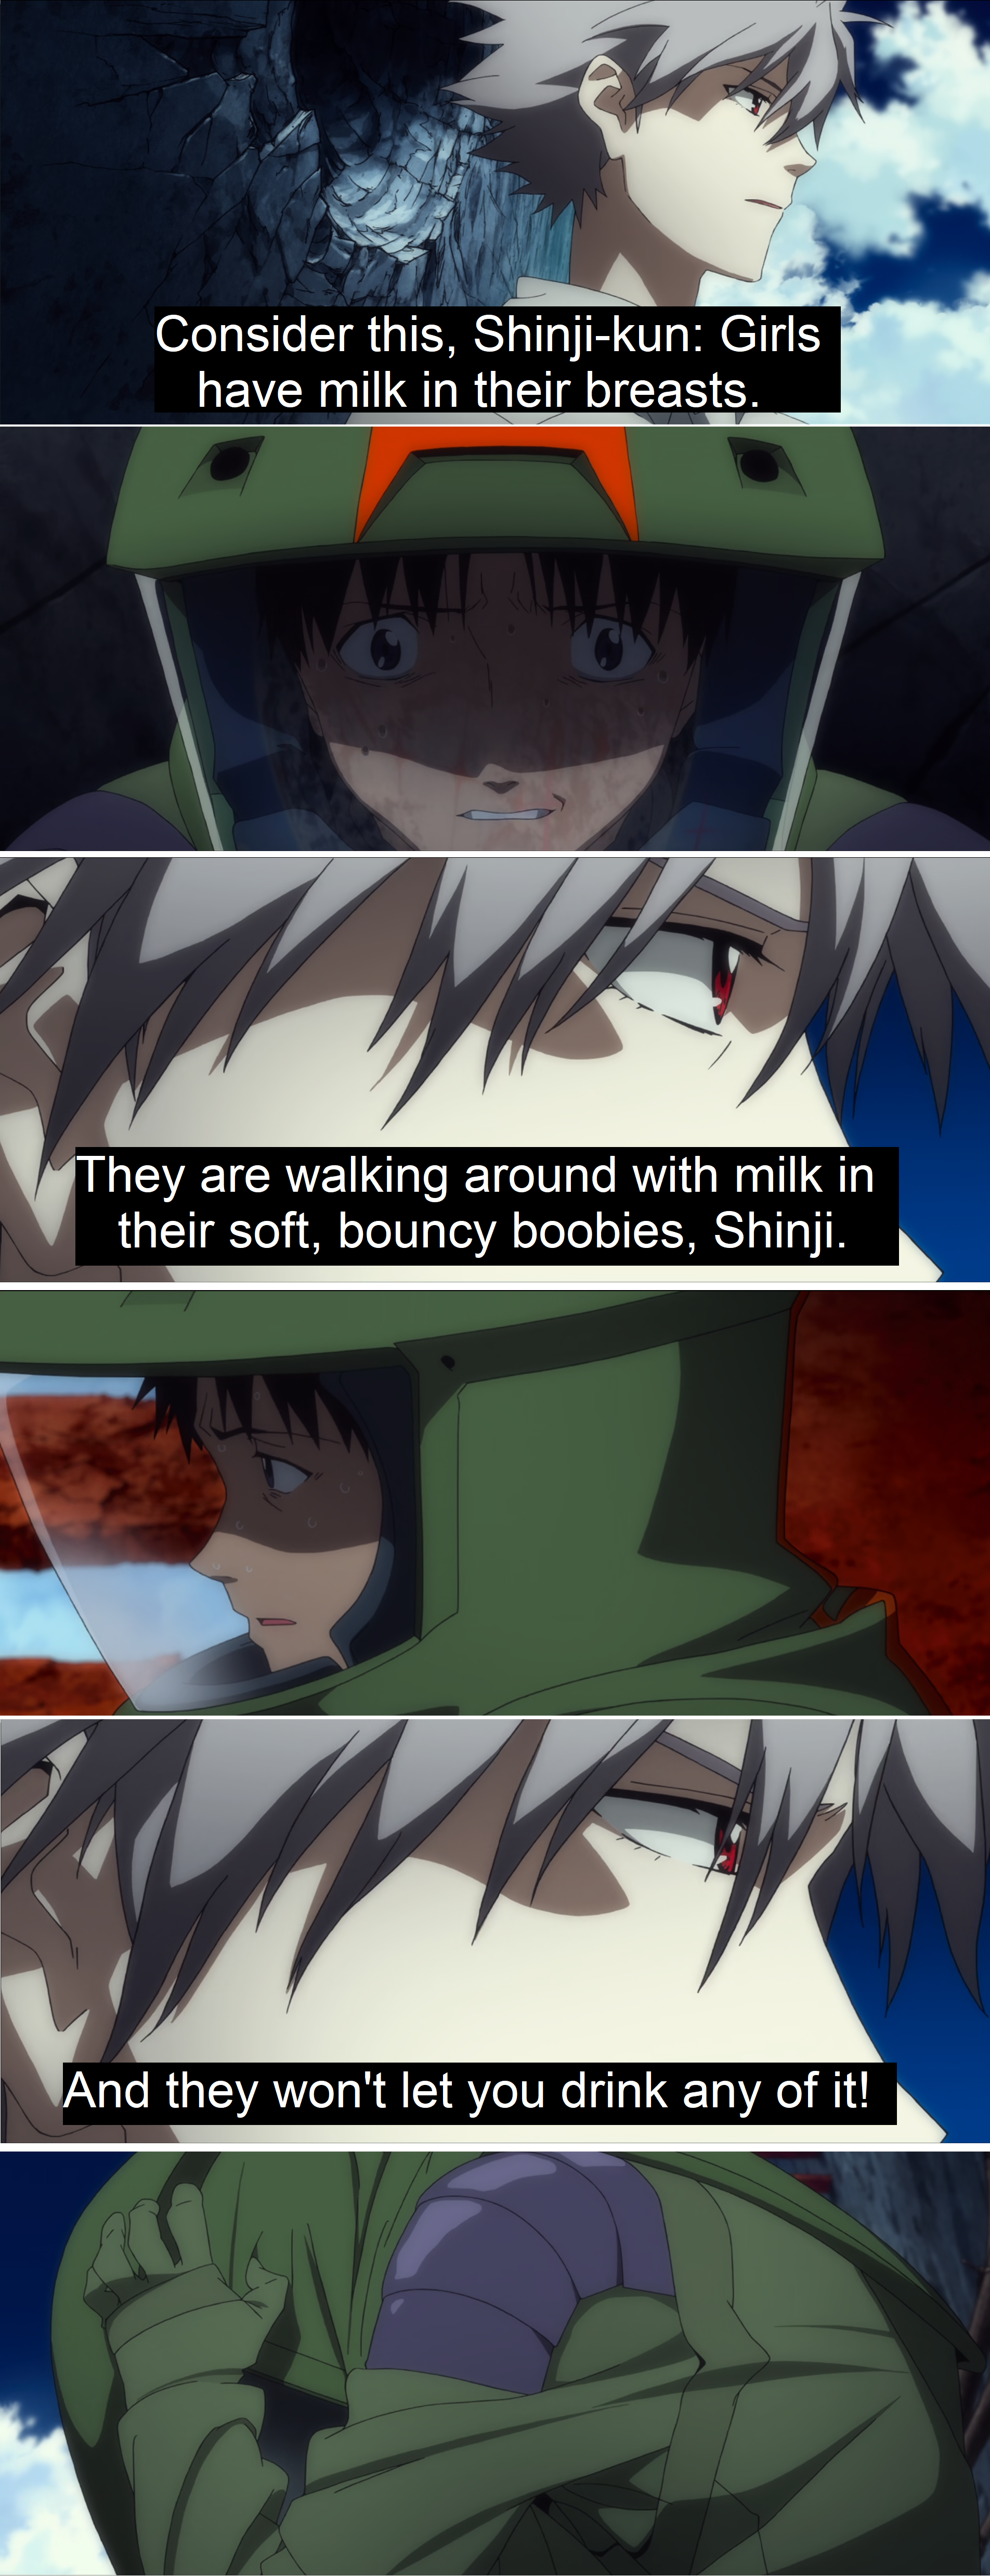 Suck on the boob-bot, Shinji.